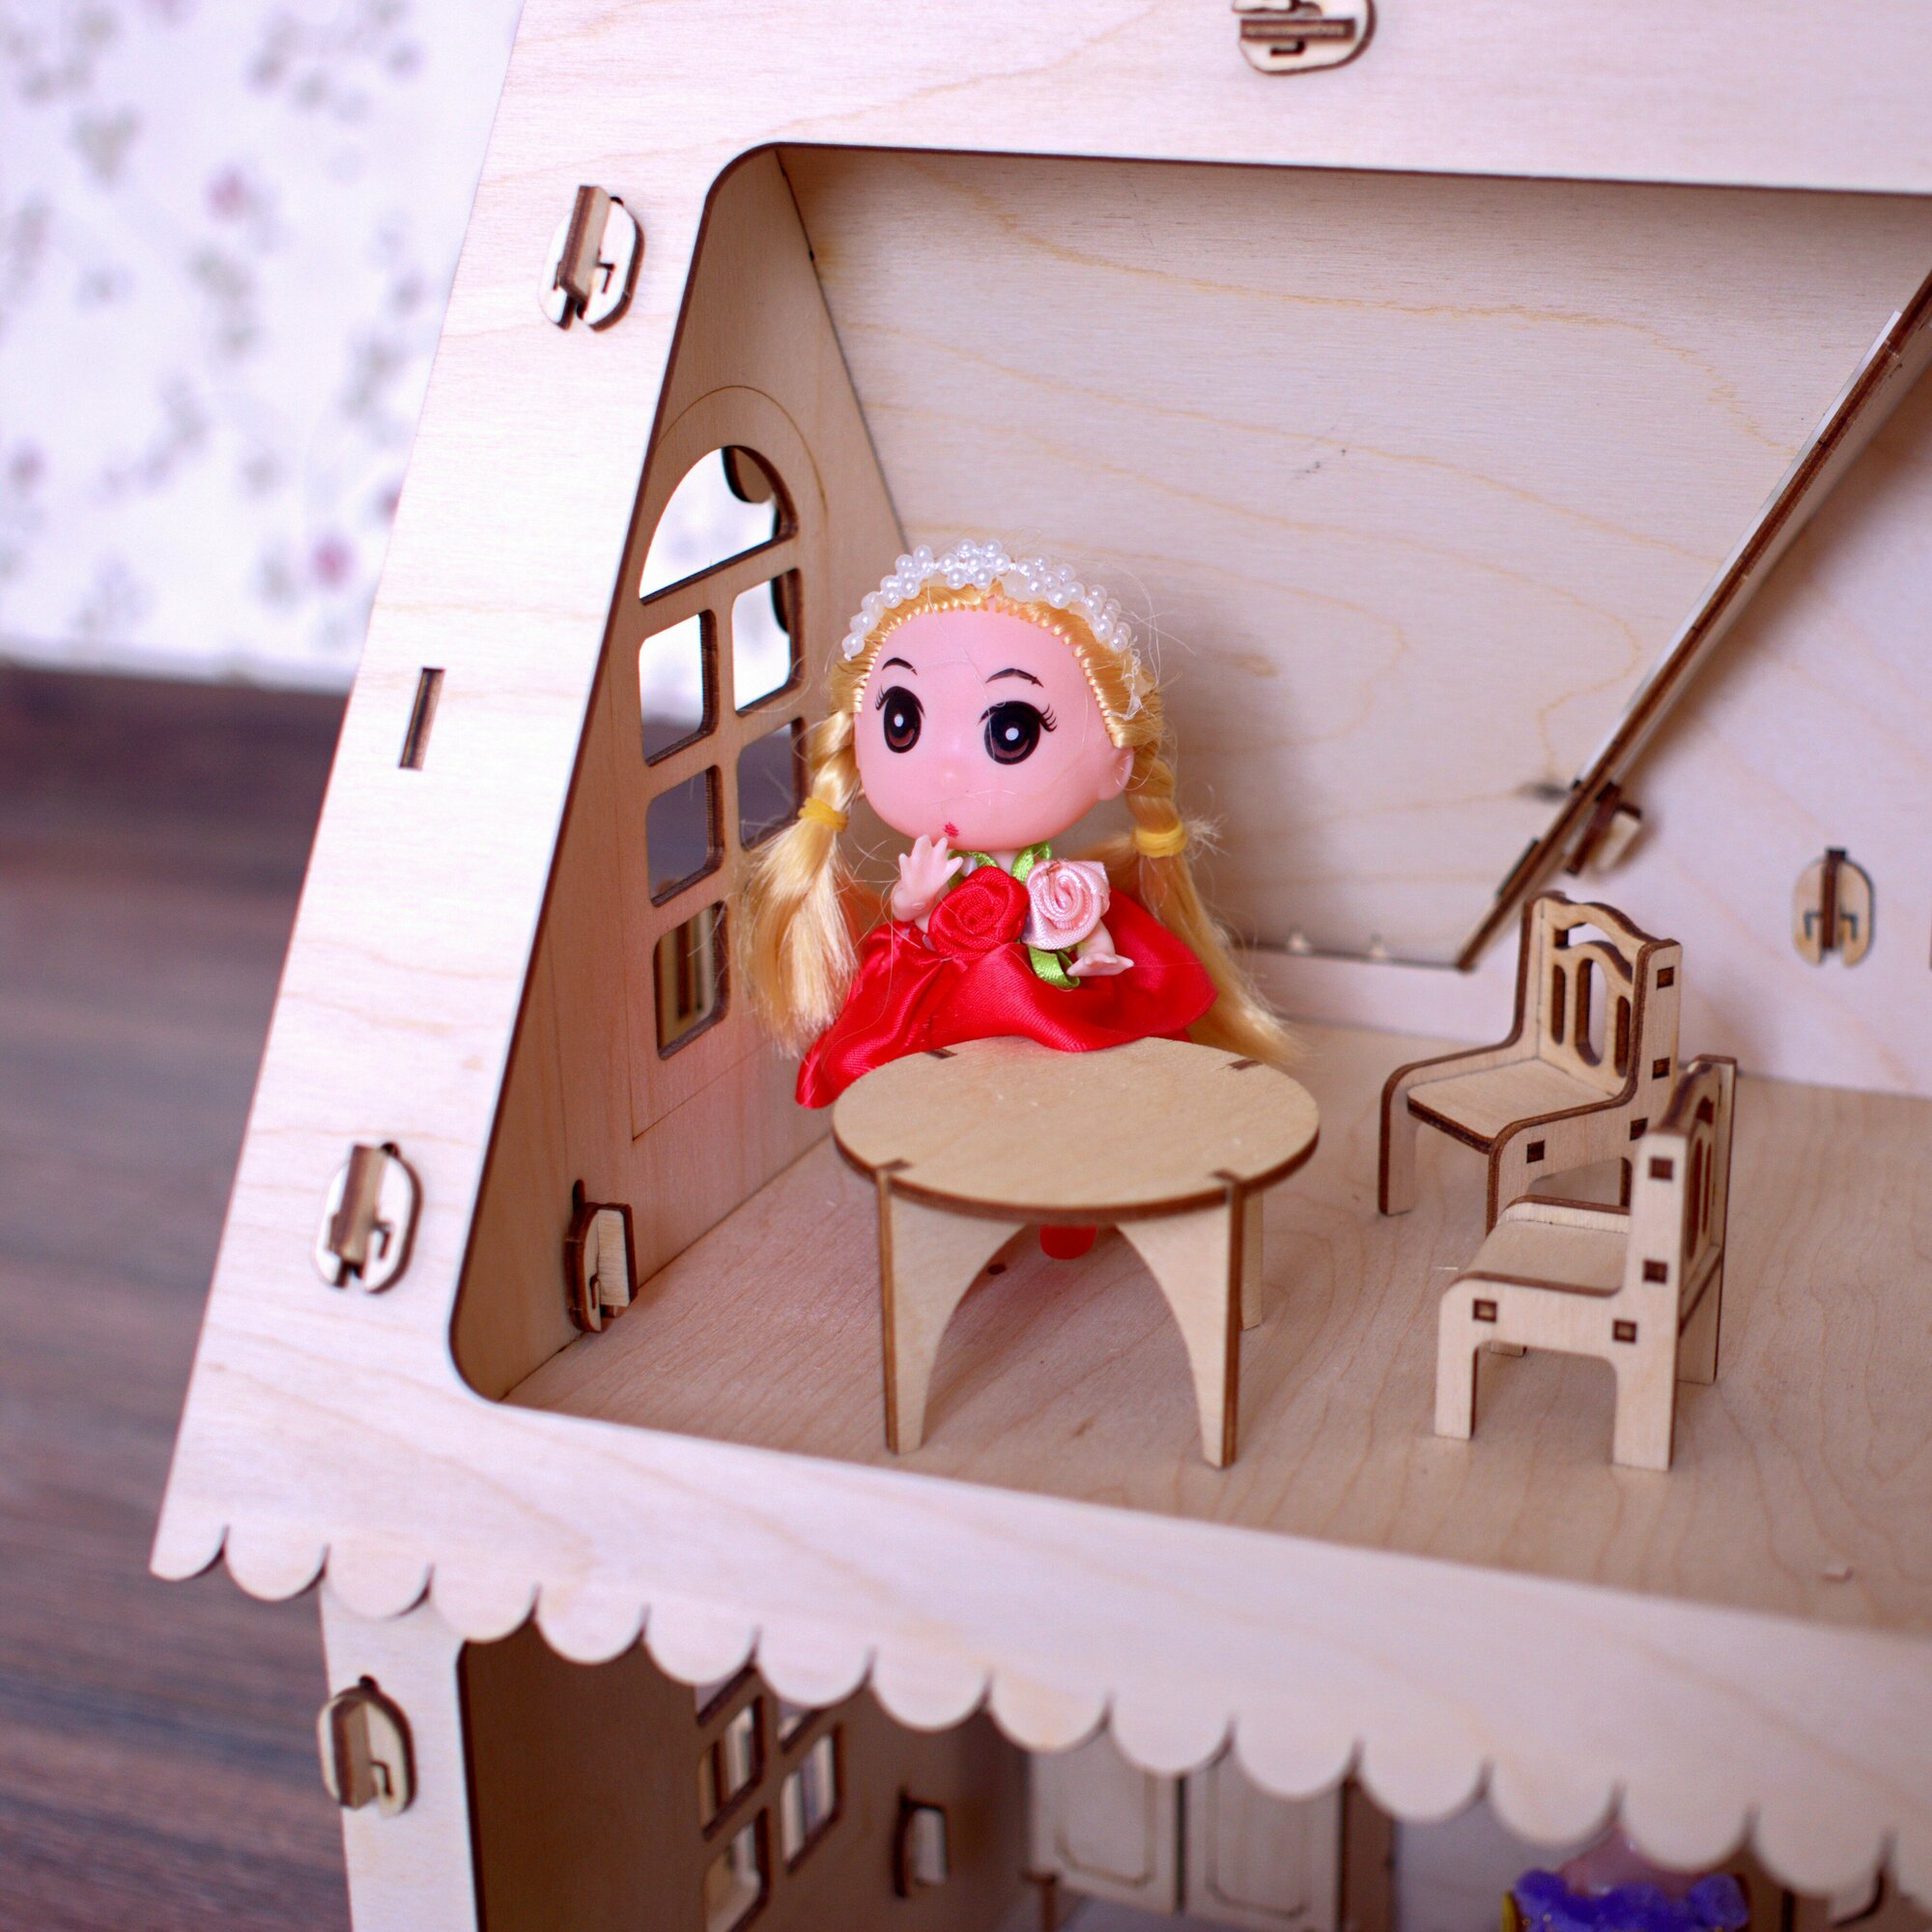 Домик "Country house" для маленьких кукол